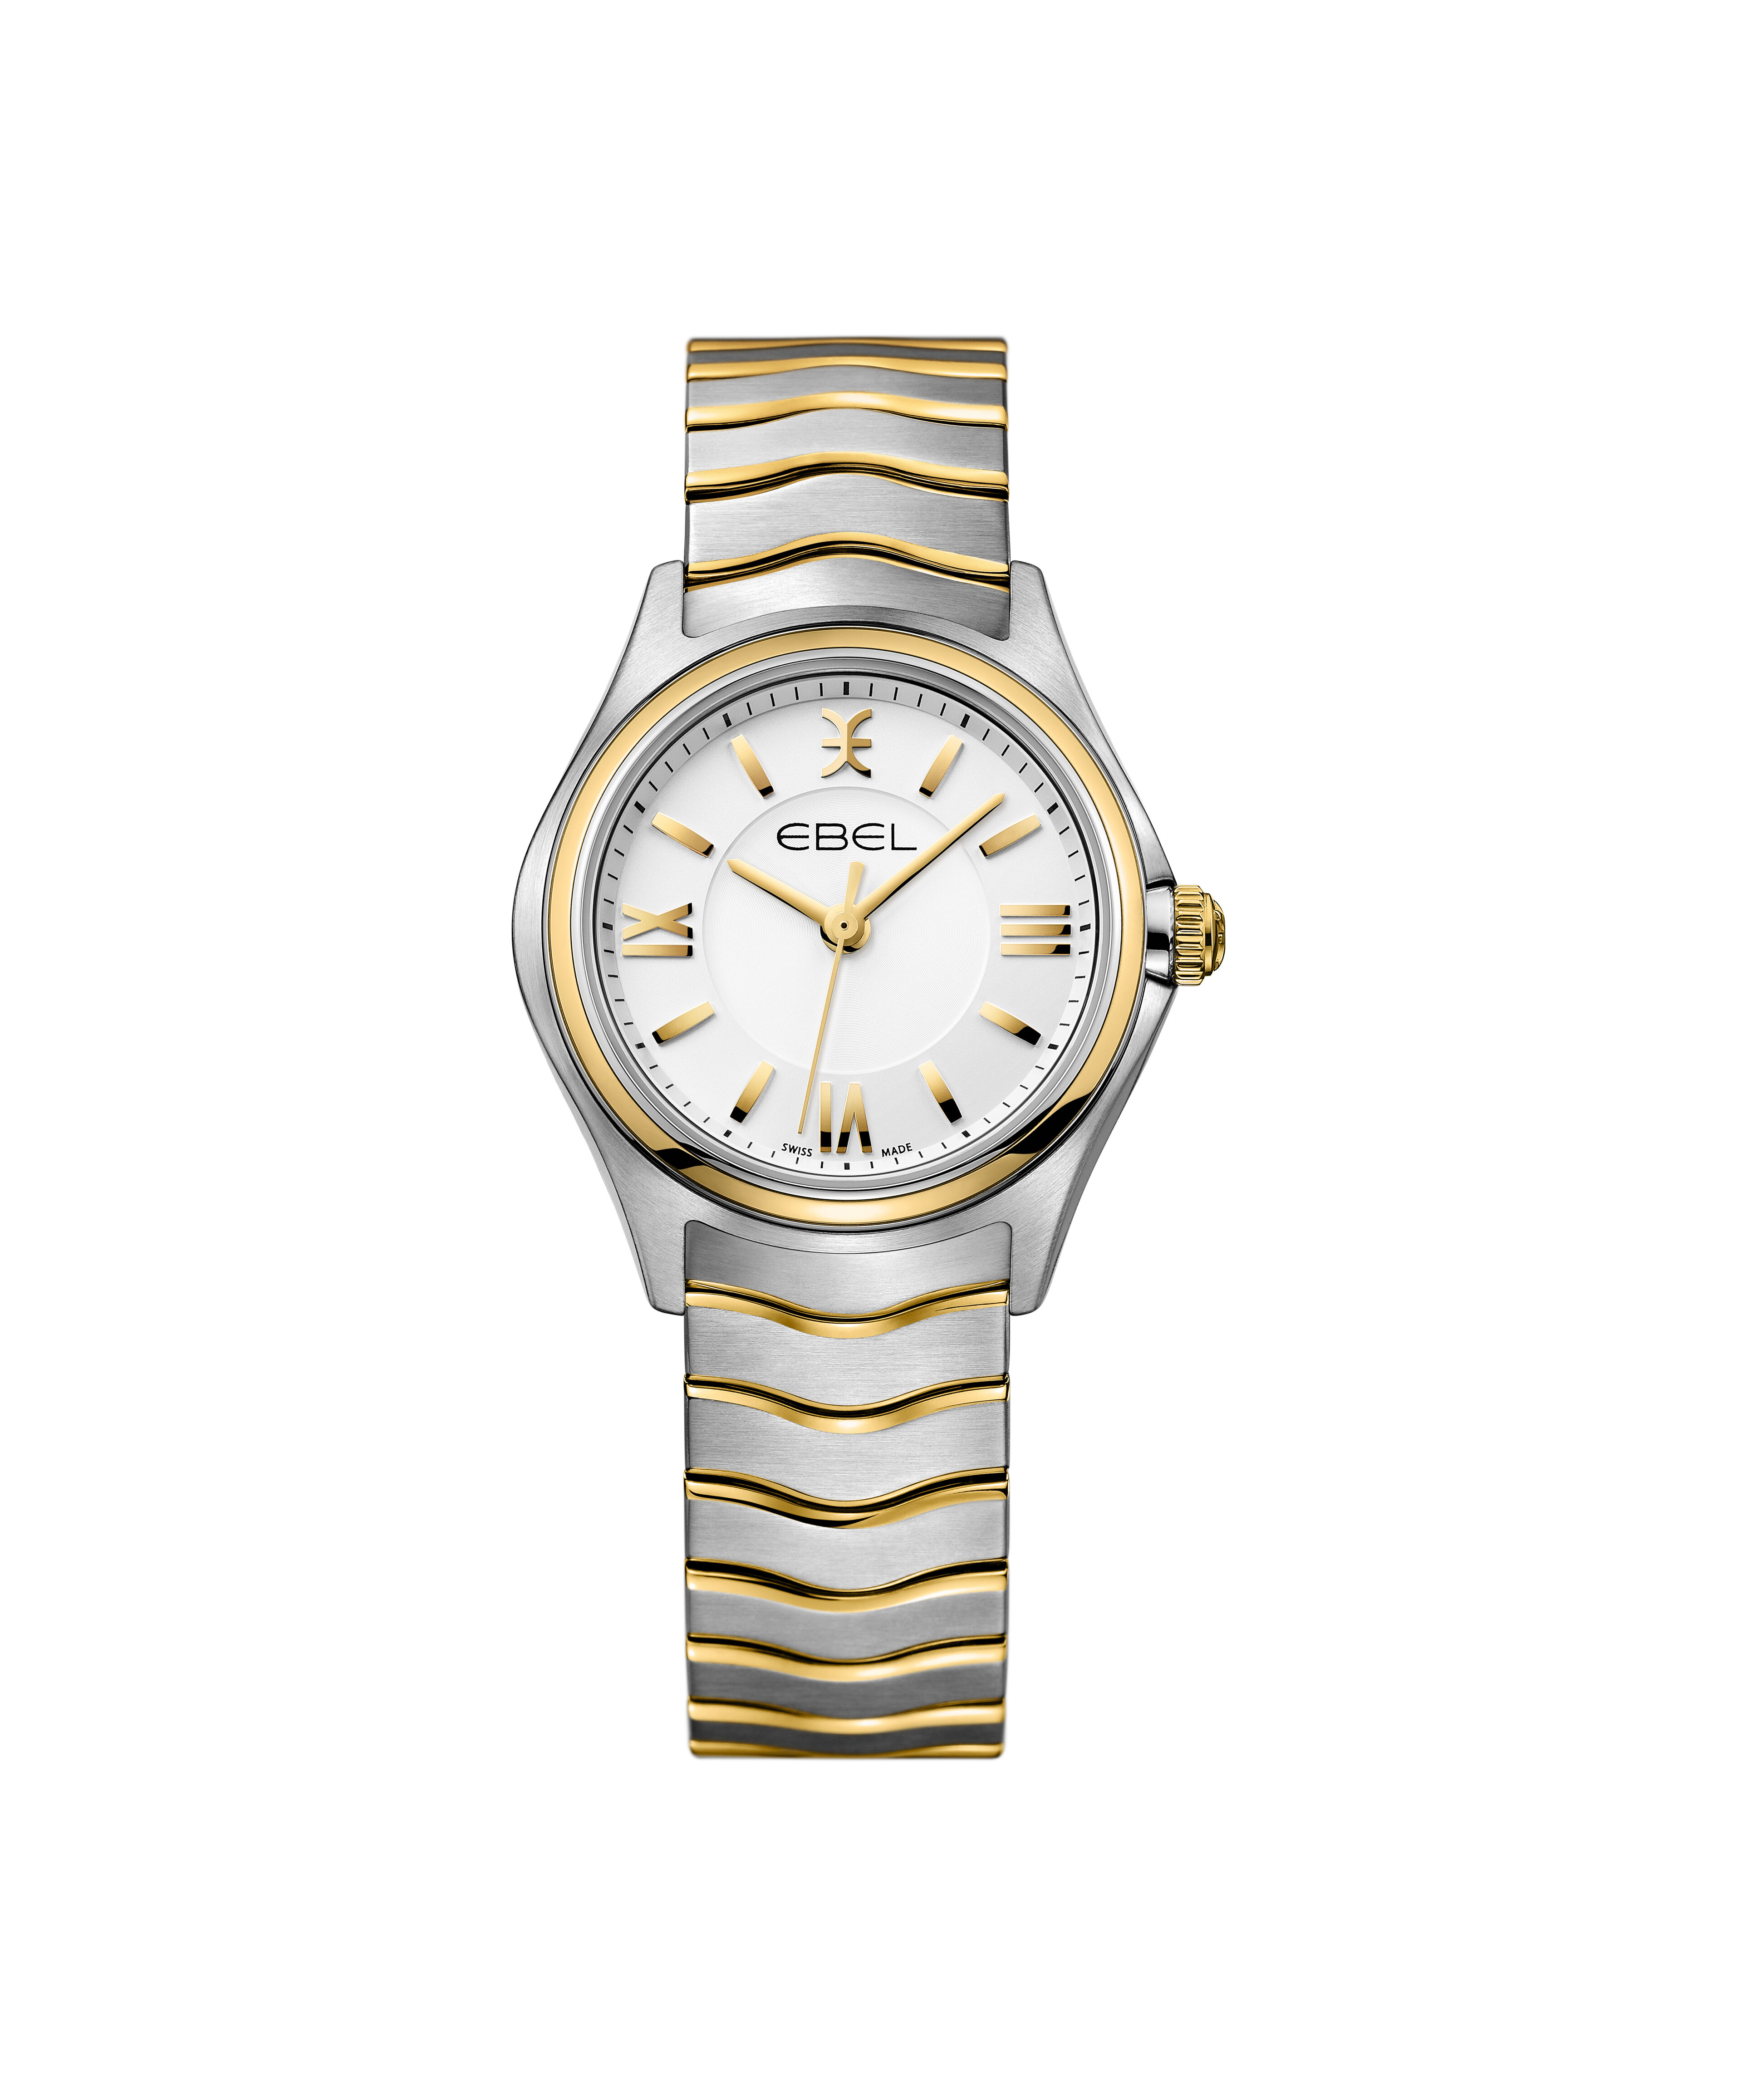 Rolex Swiss Replica Watches Information